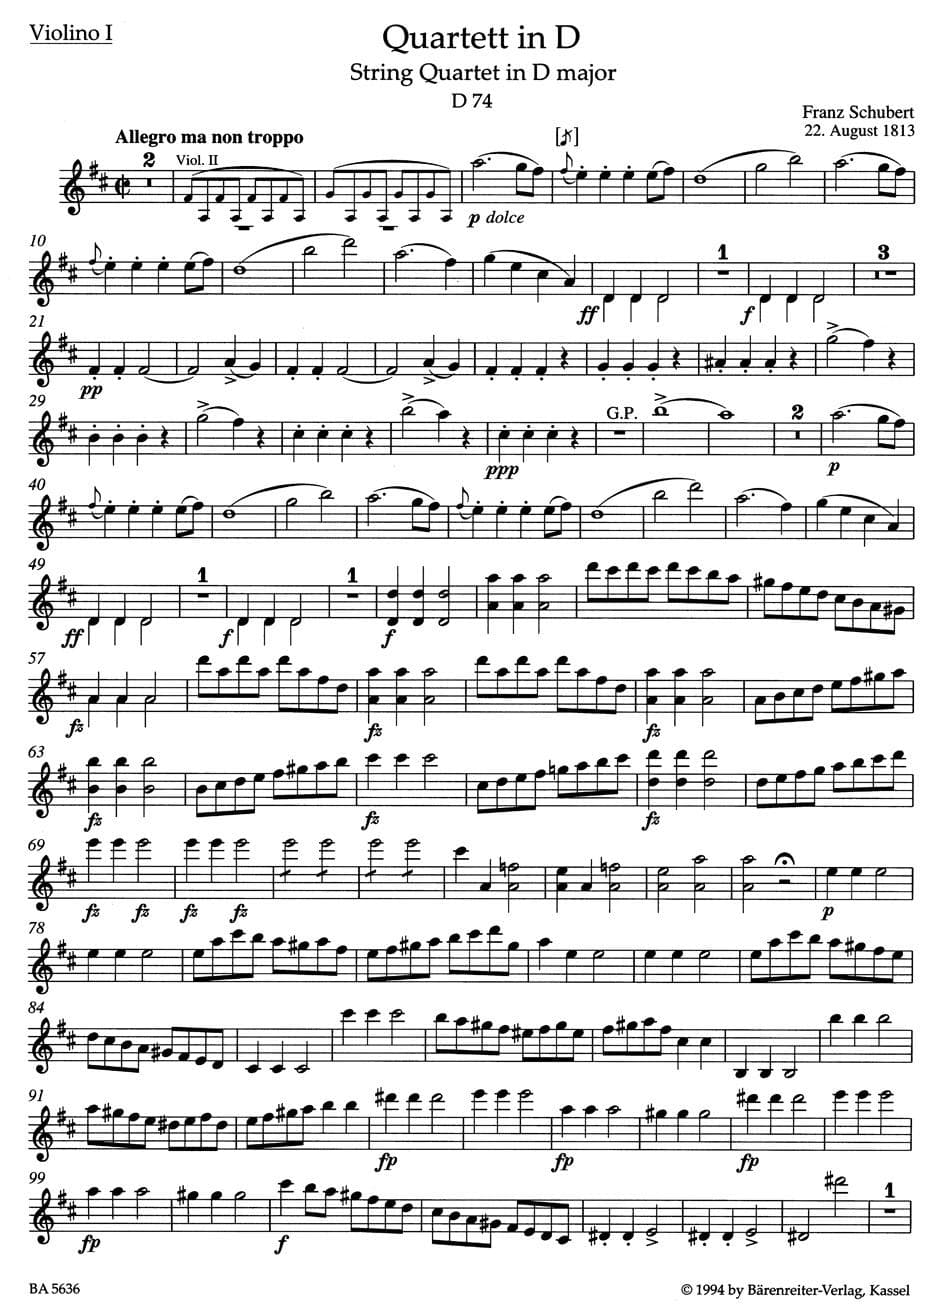 Schubert, Franz - Early String Quartets, Volume 3 URTEXT Published by Barenreiter